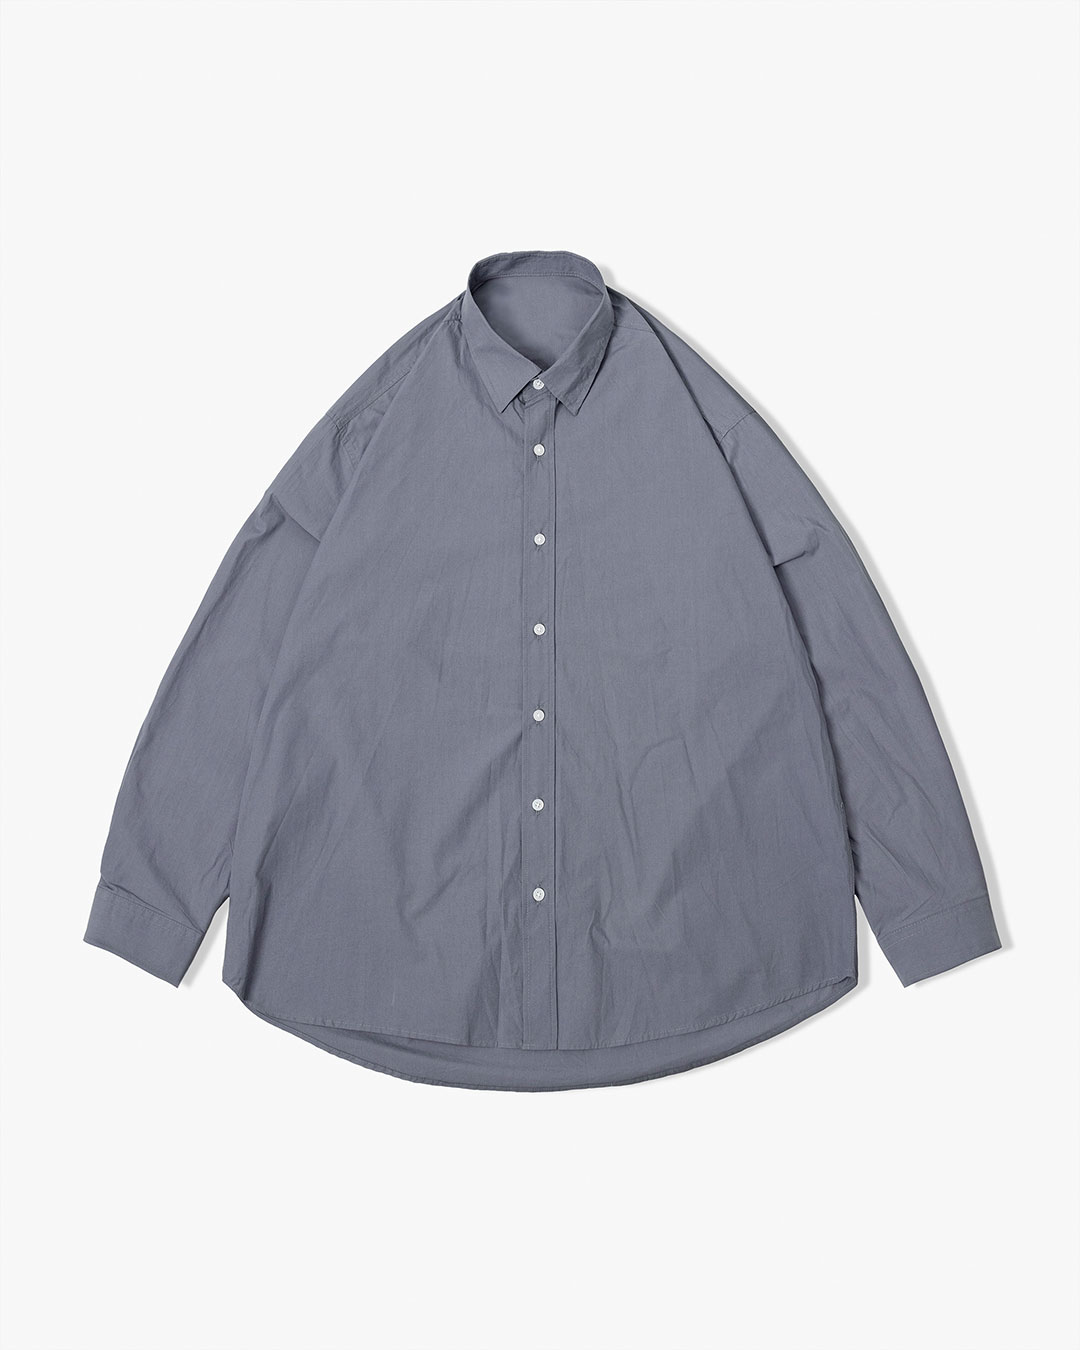 Paper Bio Washing Shirt (Blue Gray)